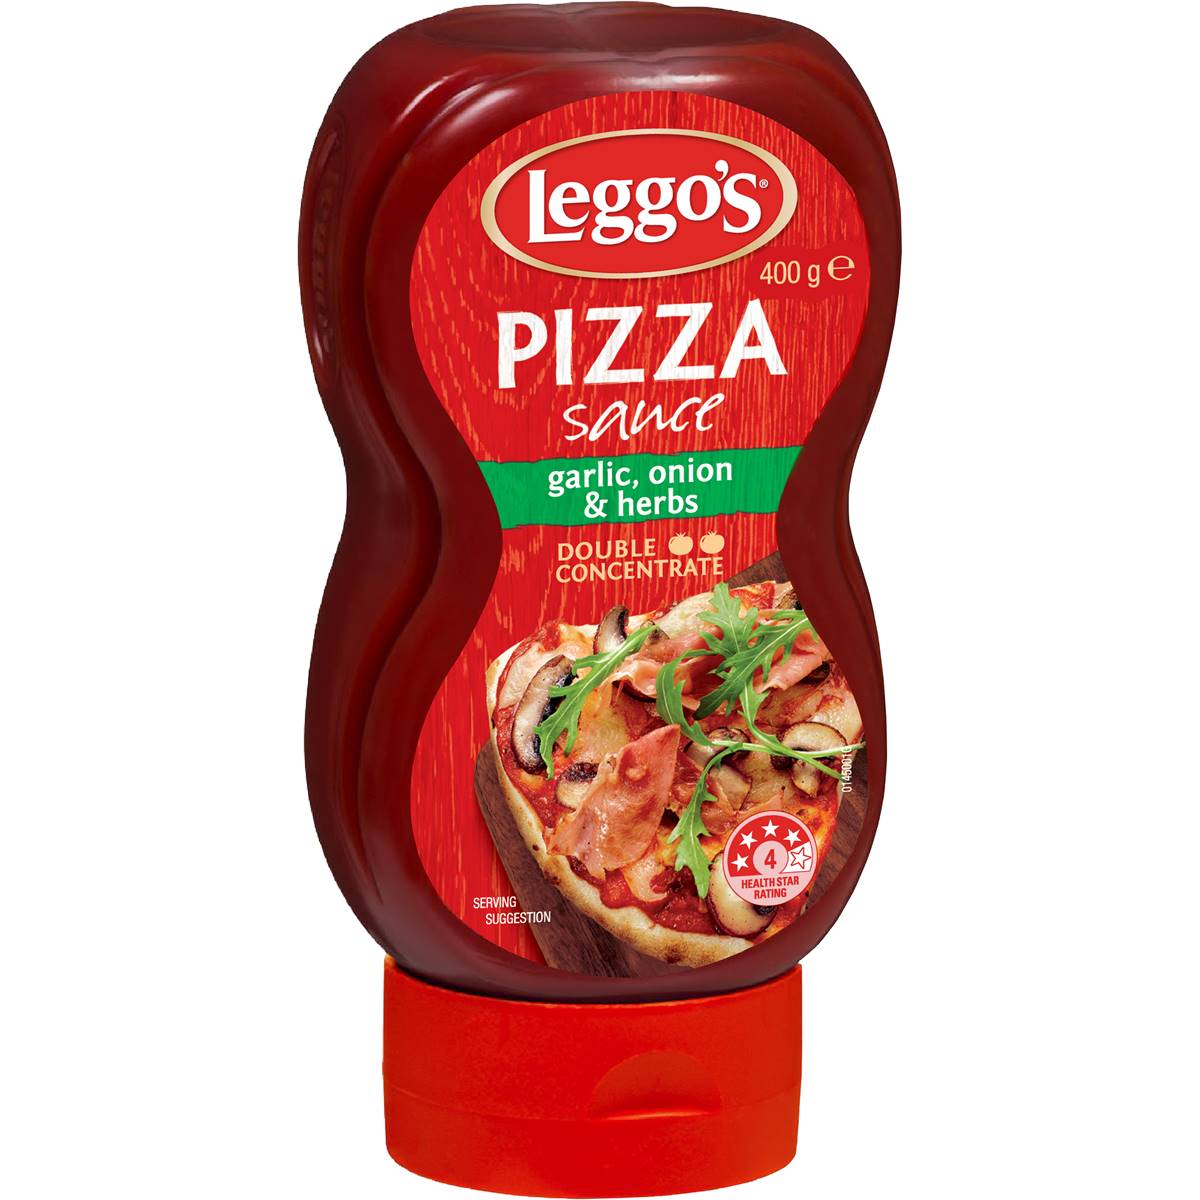 Leggos Pizza Sauce with Garlic Onion & Herbs 400g